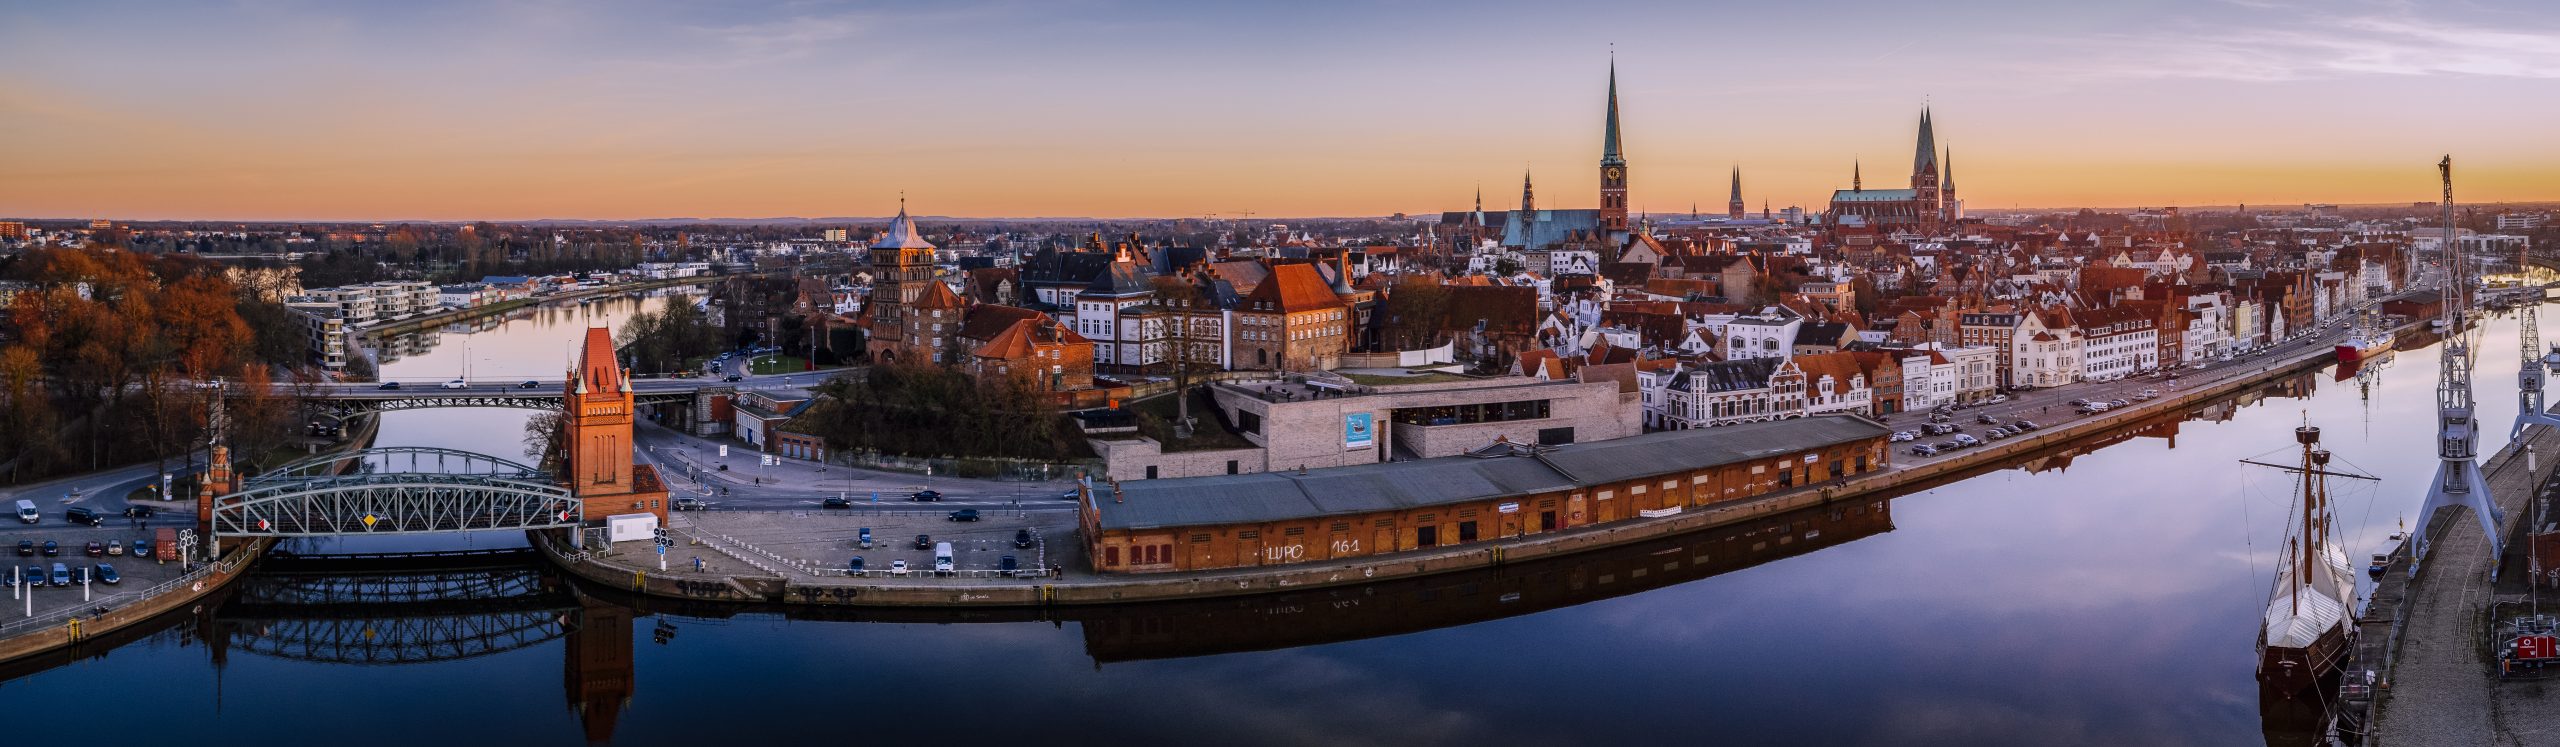 das immo büro Makler Lübeck – Lübeck Panorama im Sonnenuntergang